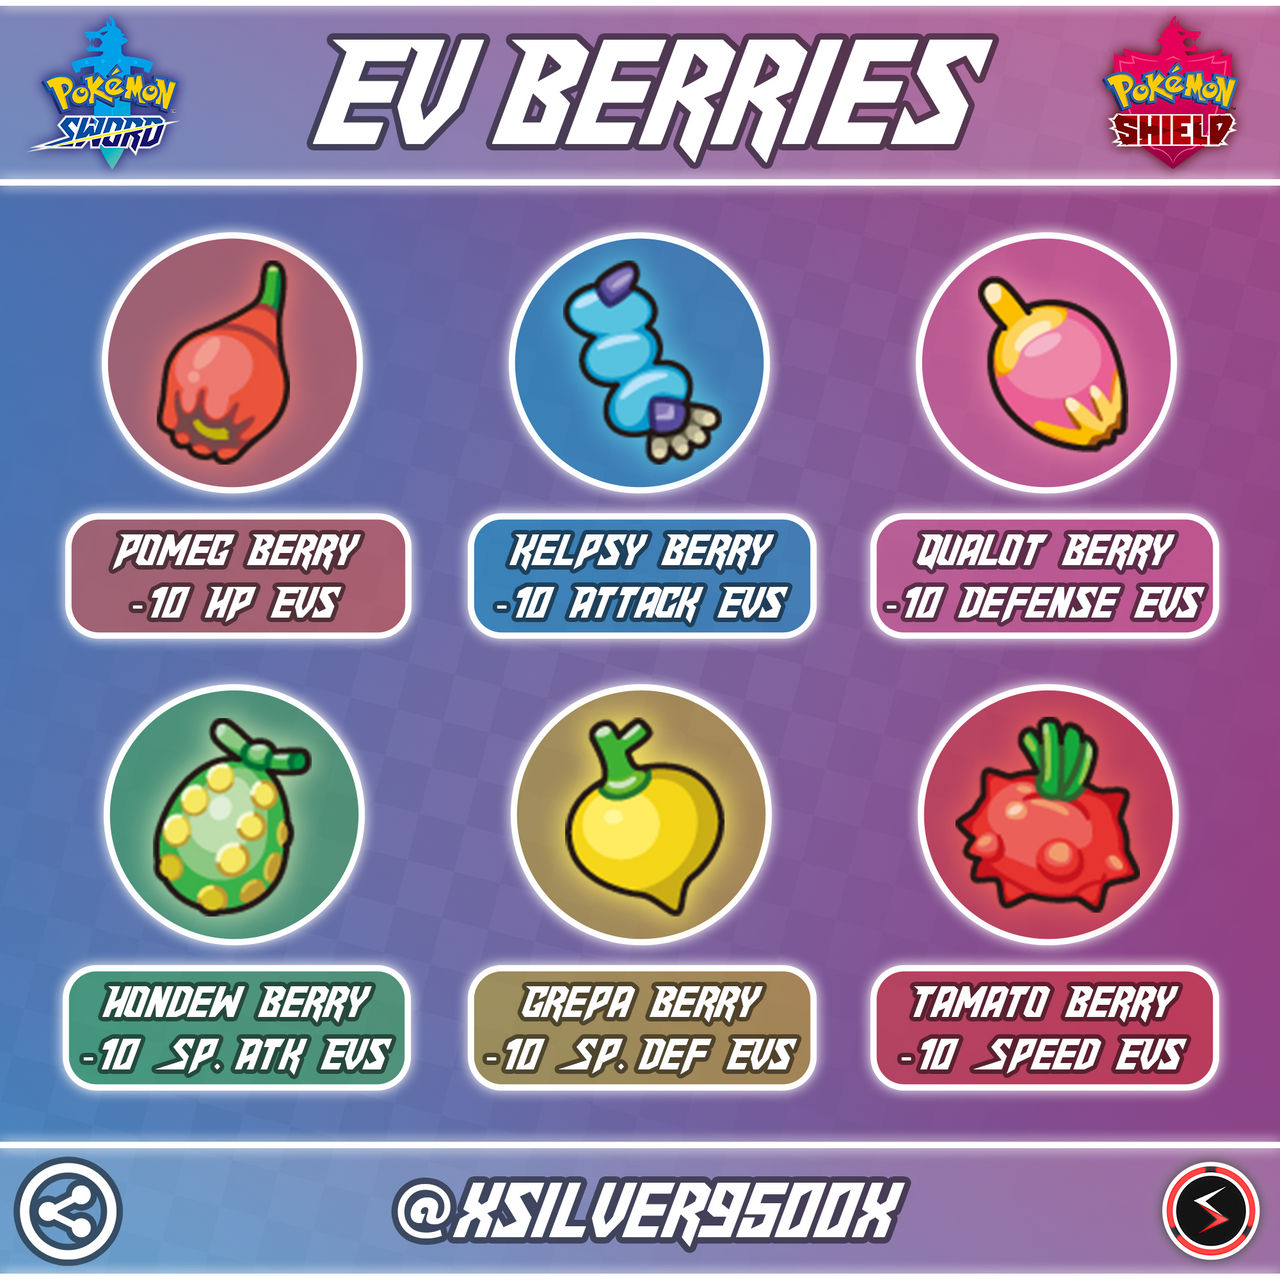 Pokemon SWSH Infographic [EV Berries] by xSilver9500x on DeviantArt